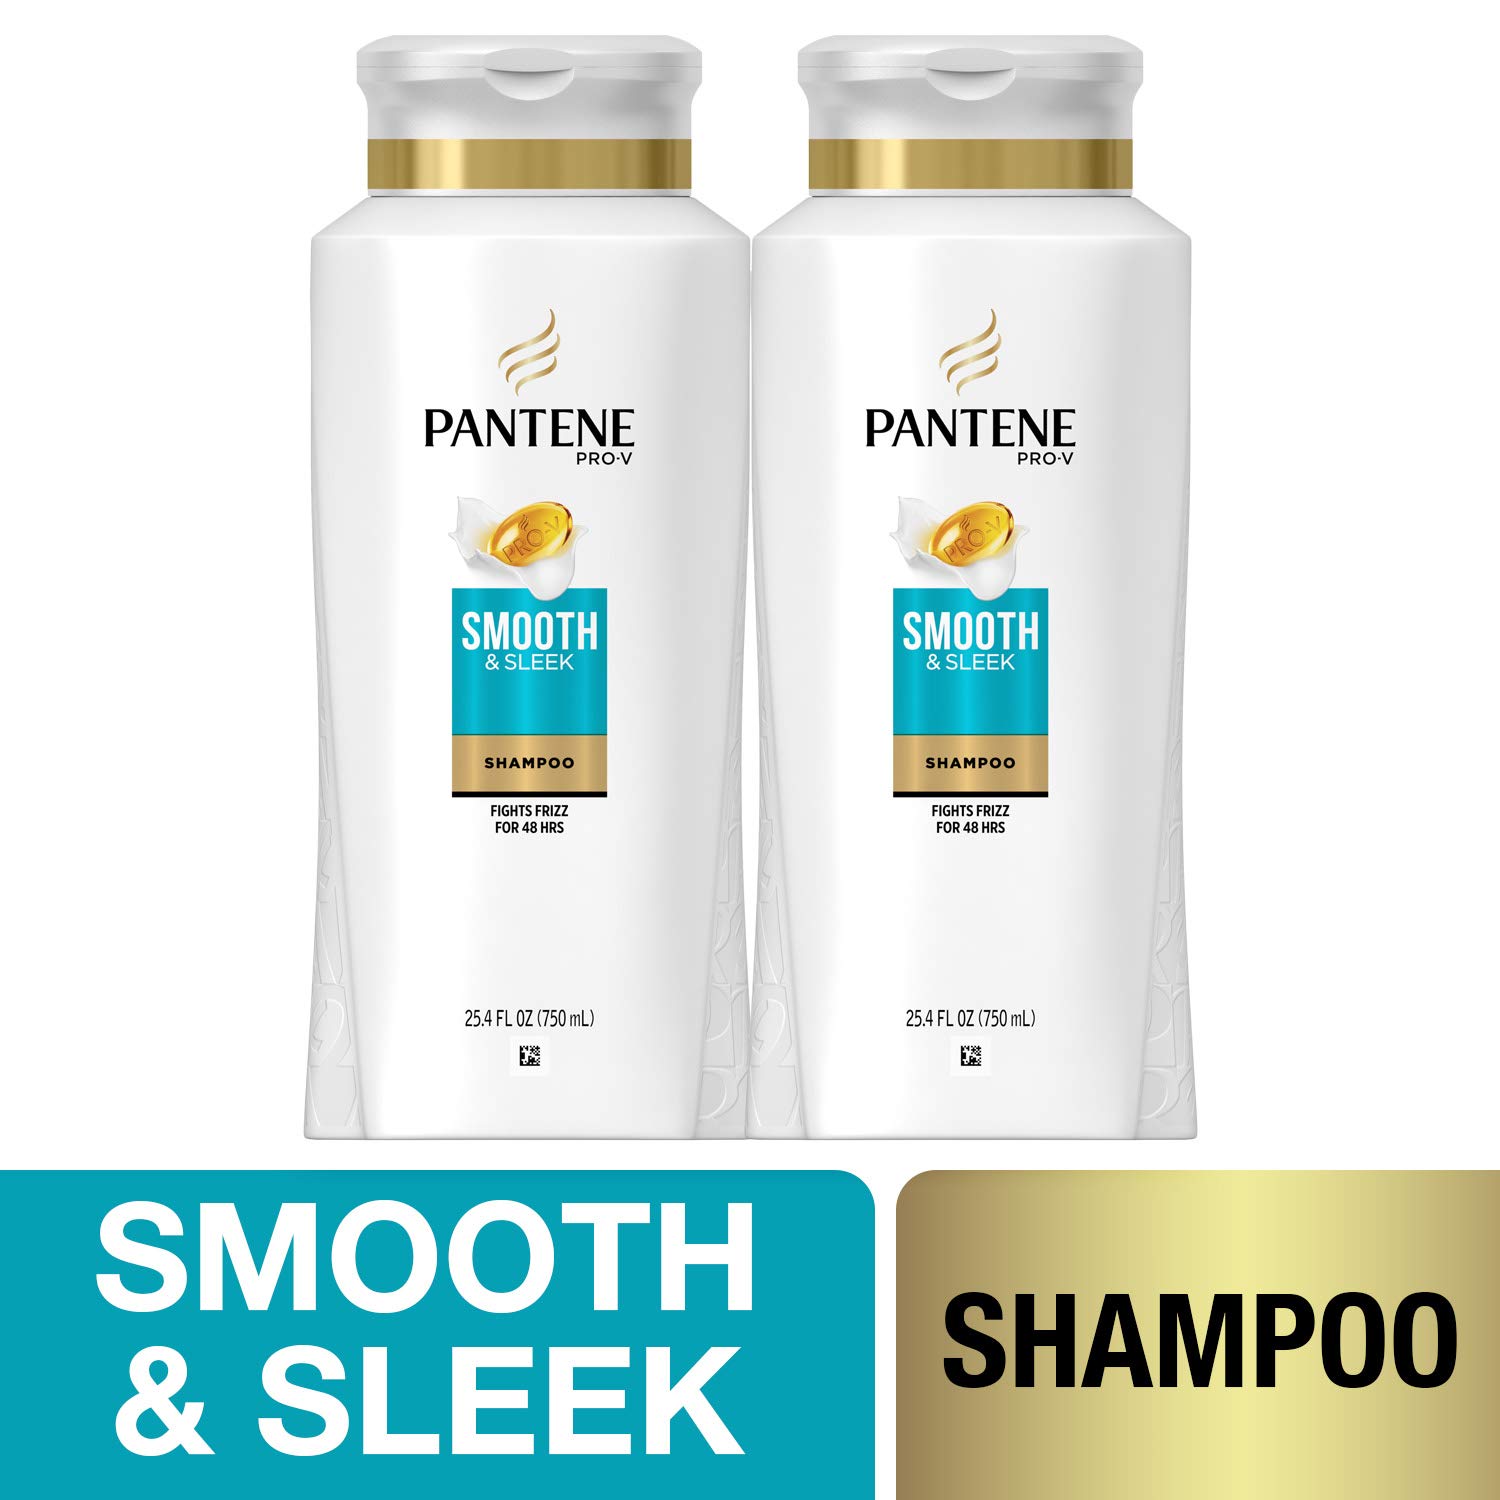 Pantene Shampoo for Oily Hair Reviews